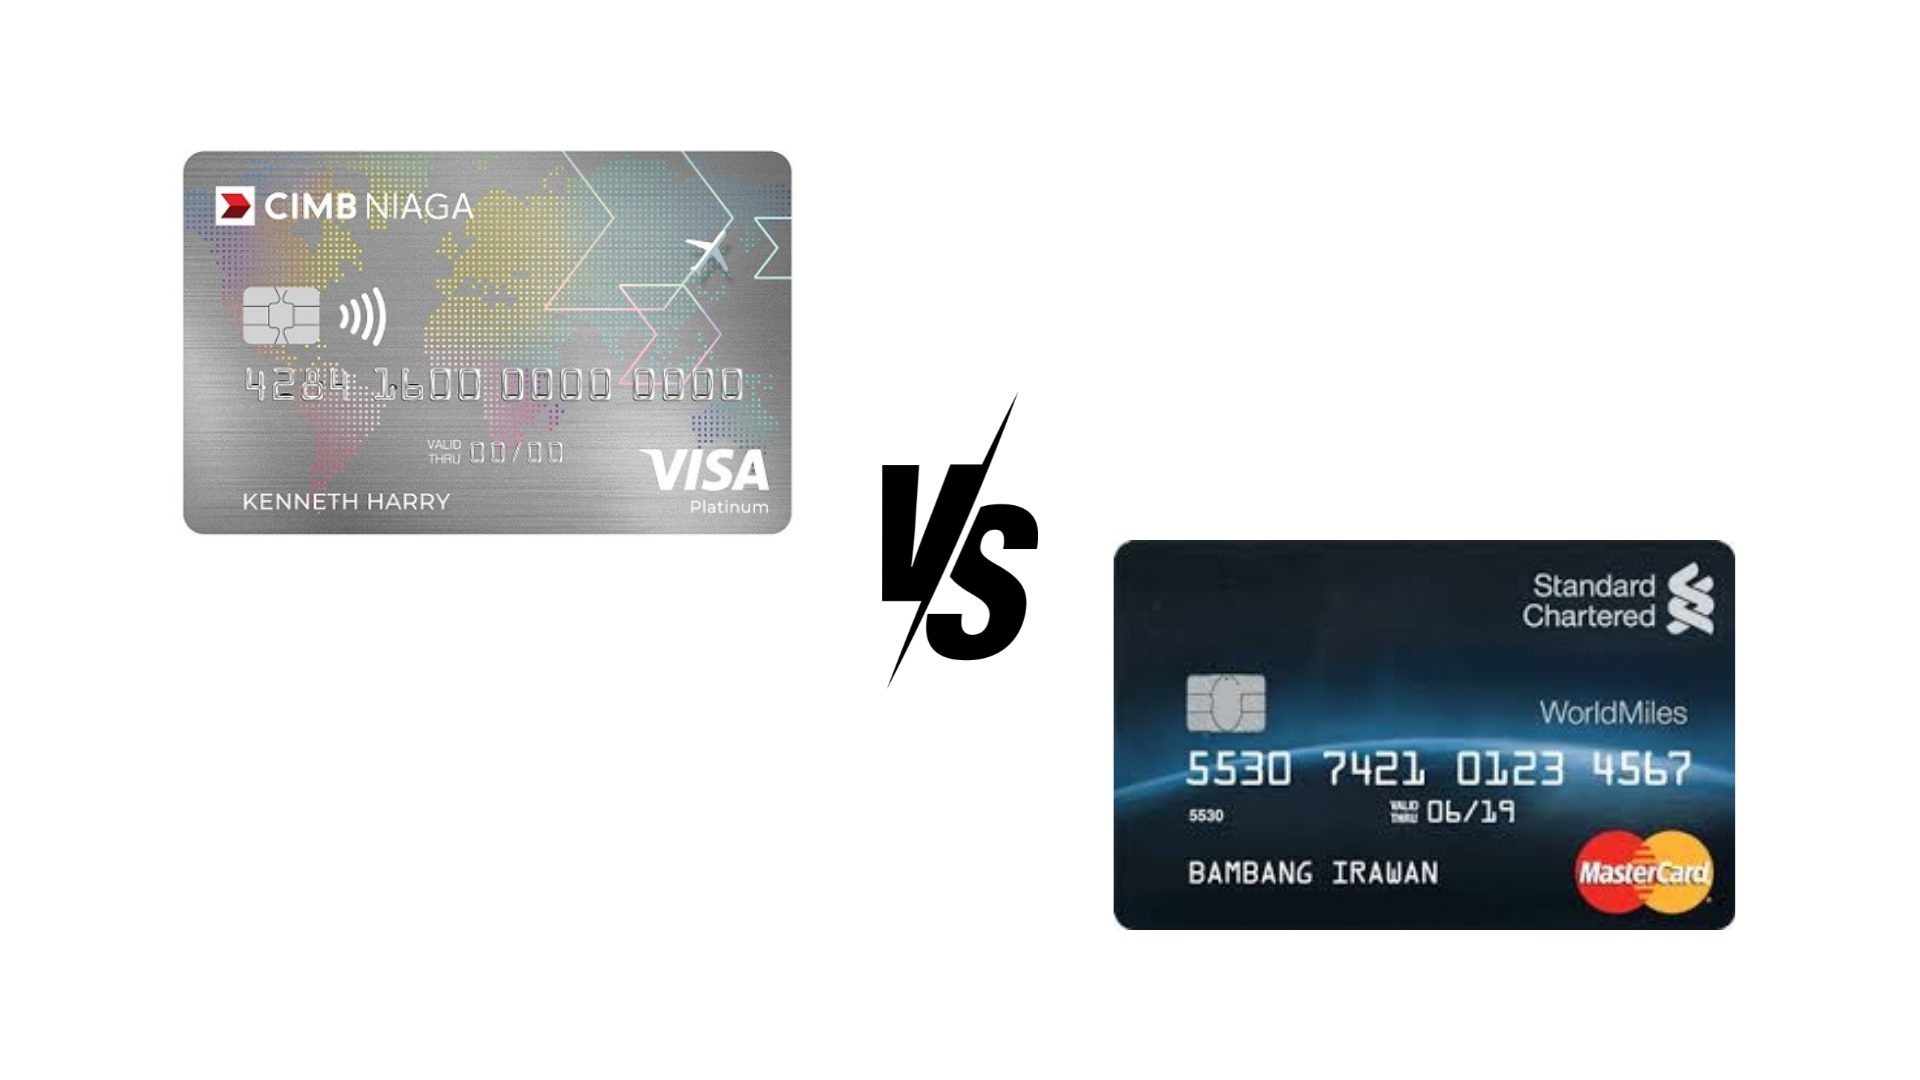 Standard Chartered WorldMiles vs CIMB Niaga Visa Travel (foto: Olahan penulis)